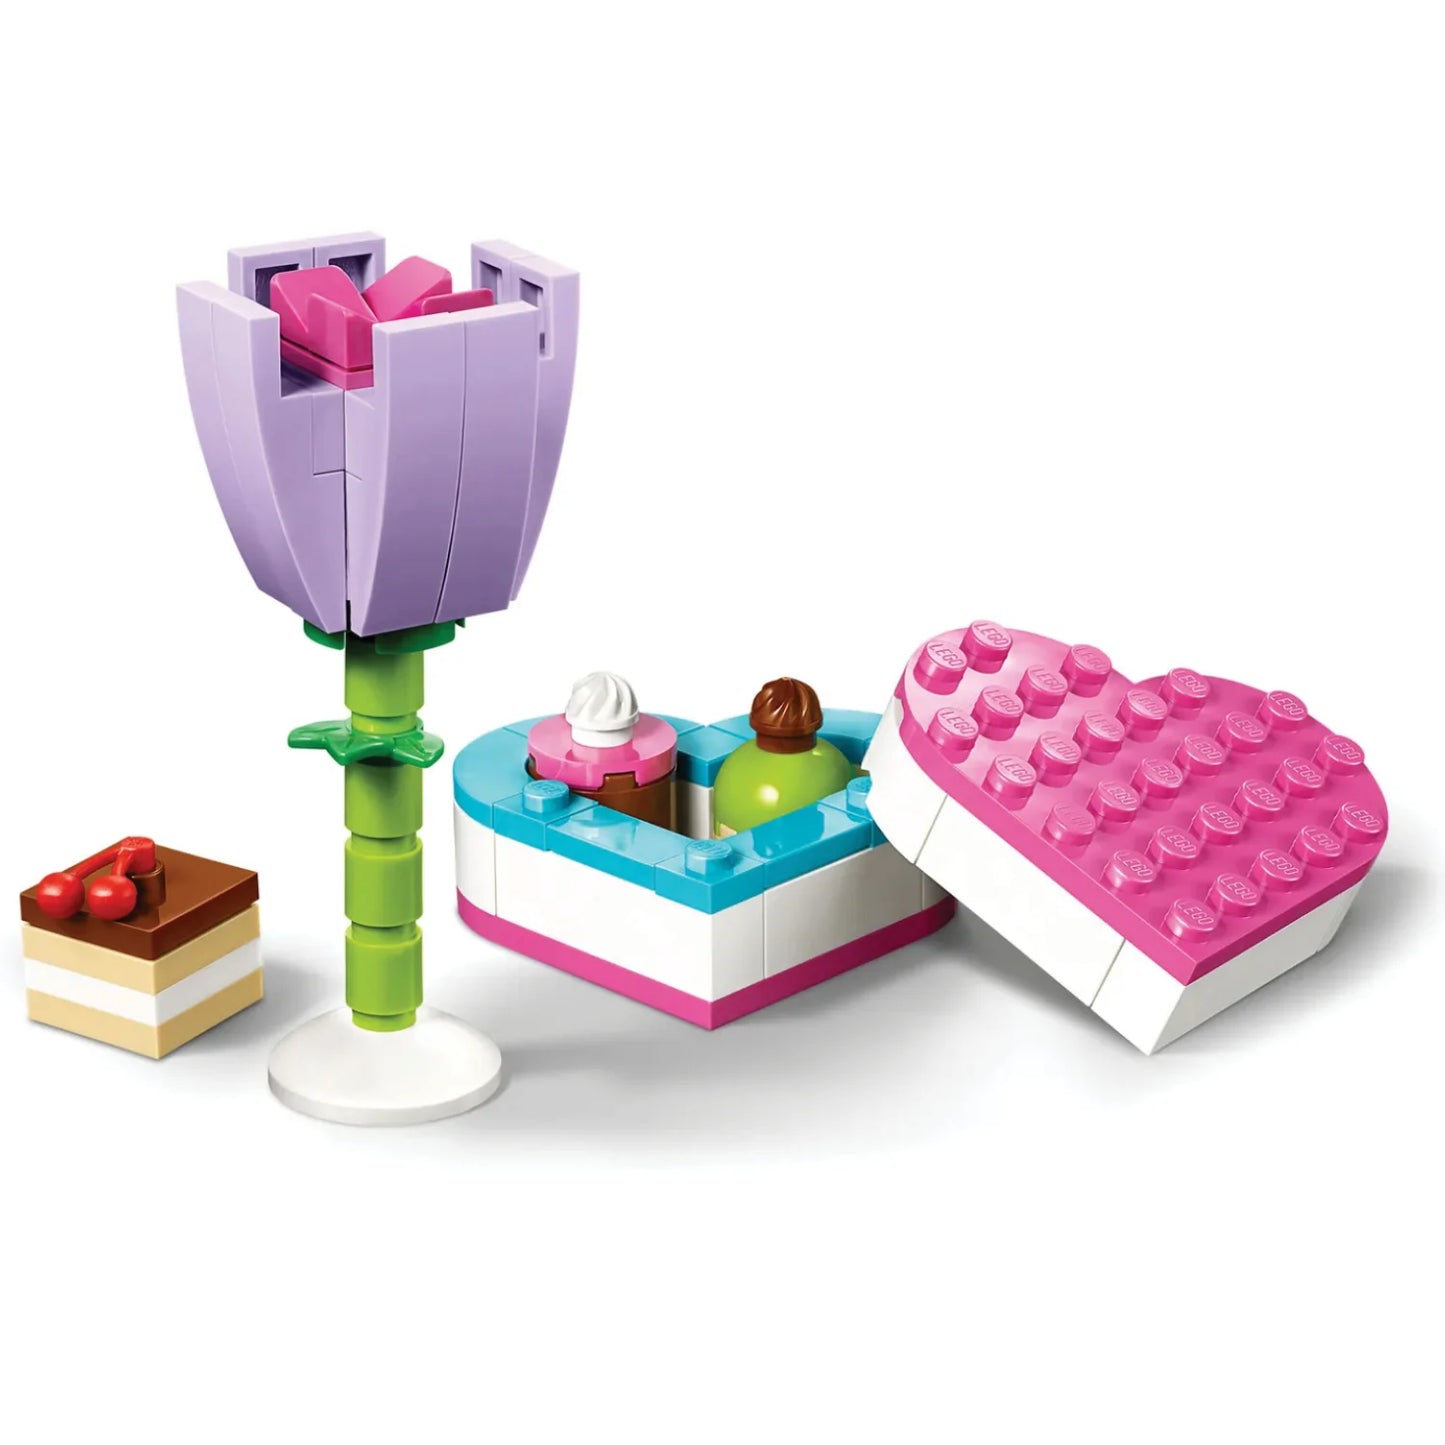 Lego Friends™ Chocolate Box & Flower 30411 Polybag